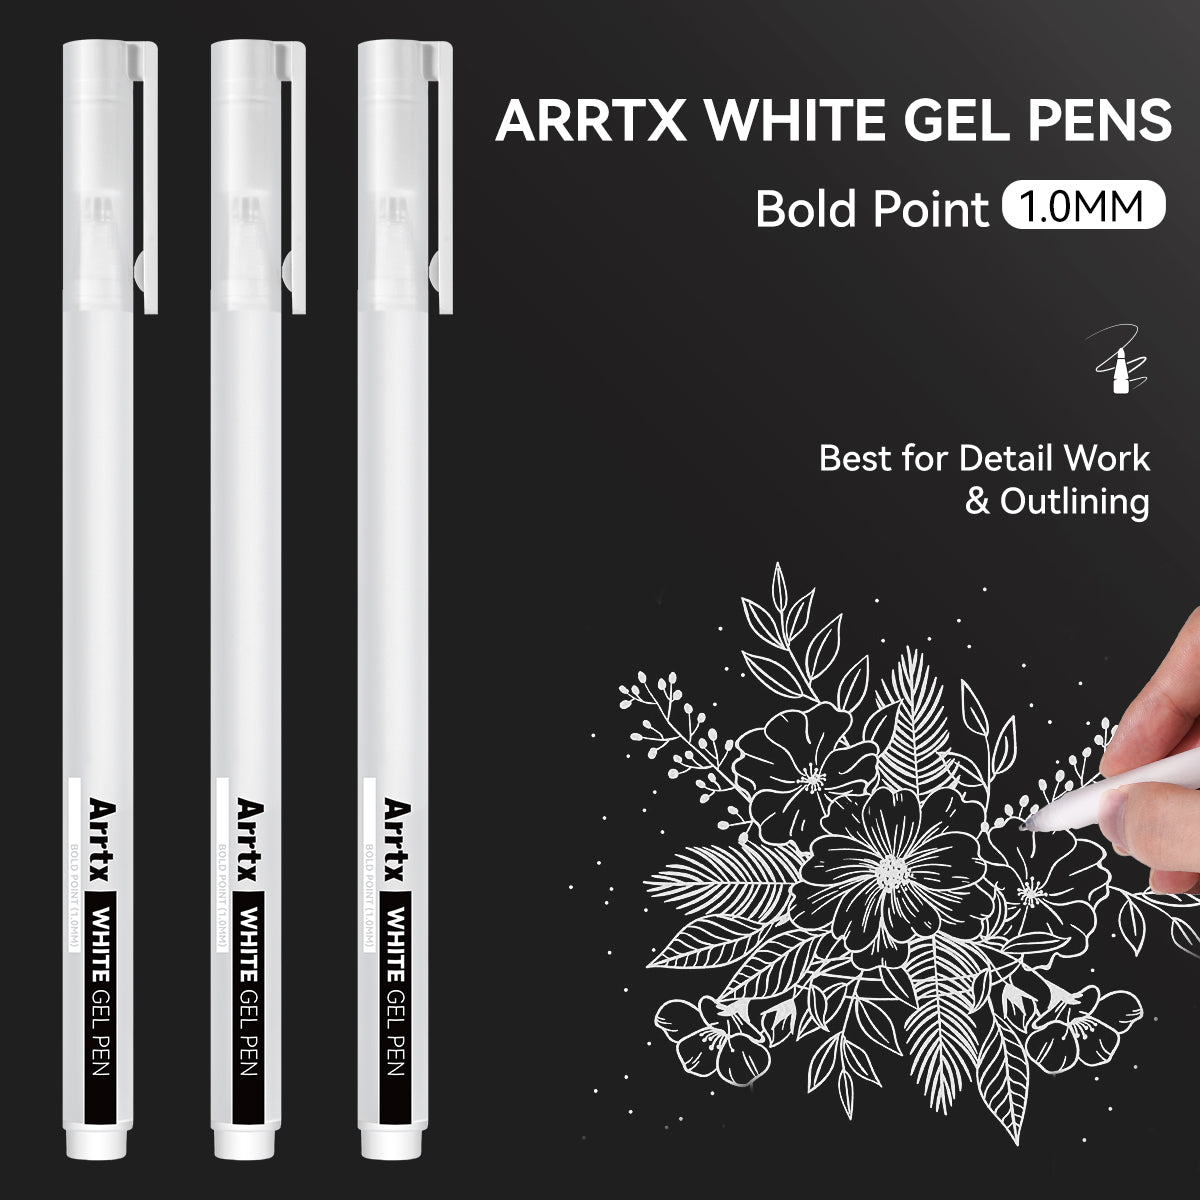 Arrtx White Gel Pens 10 Pack, 1.0MM Bold Point Opaque Gel Ink Pens